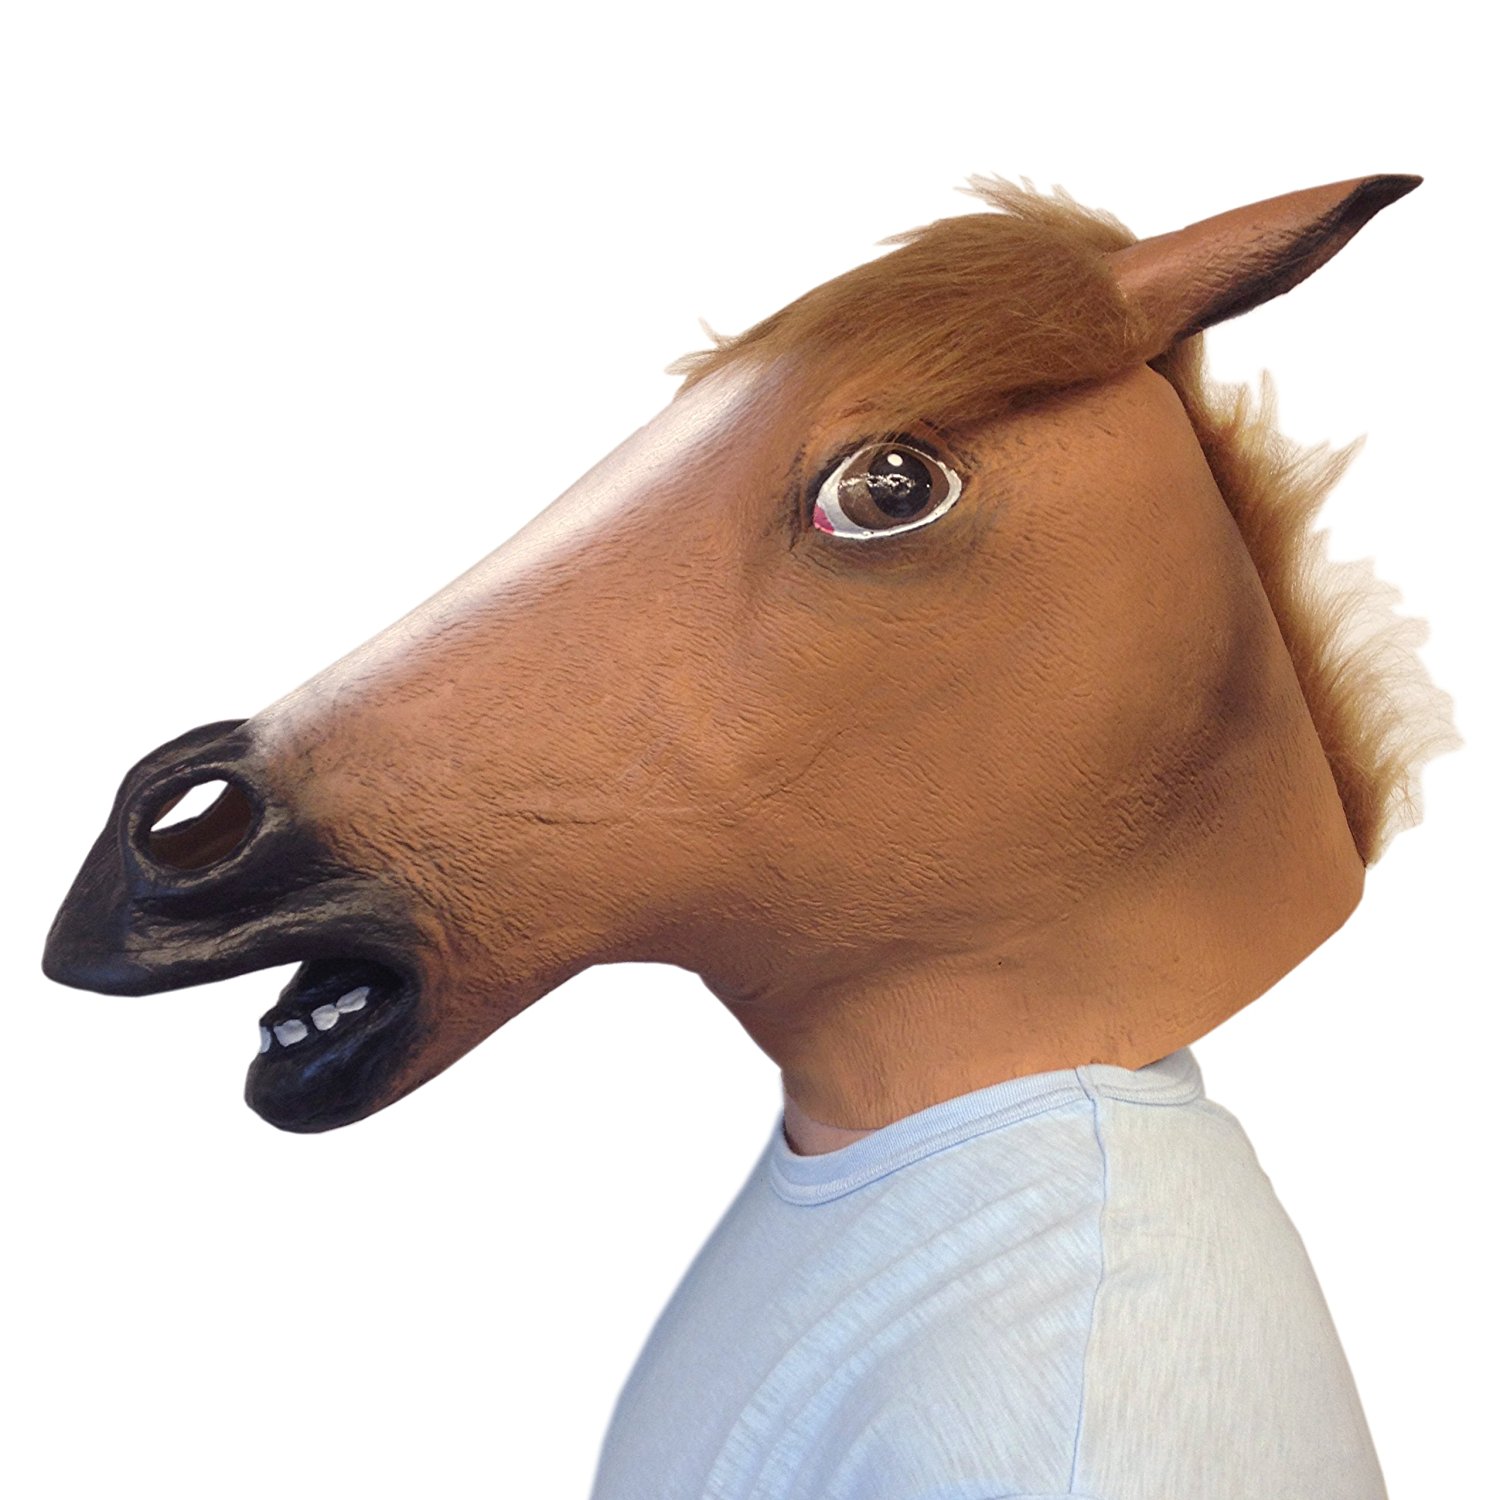 Amazon.com: Horse Head Mask Super Creepy (Best Seller): Toys & Games